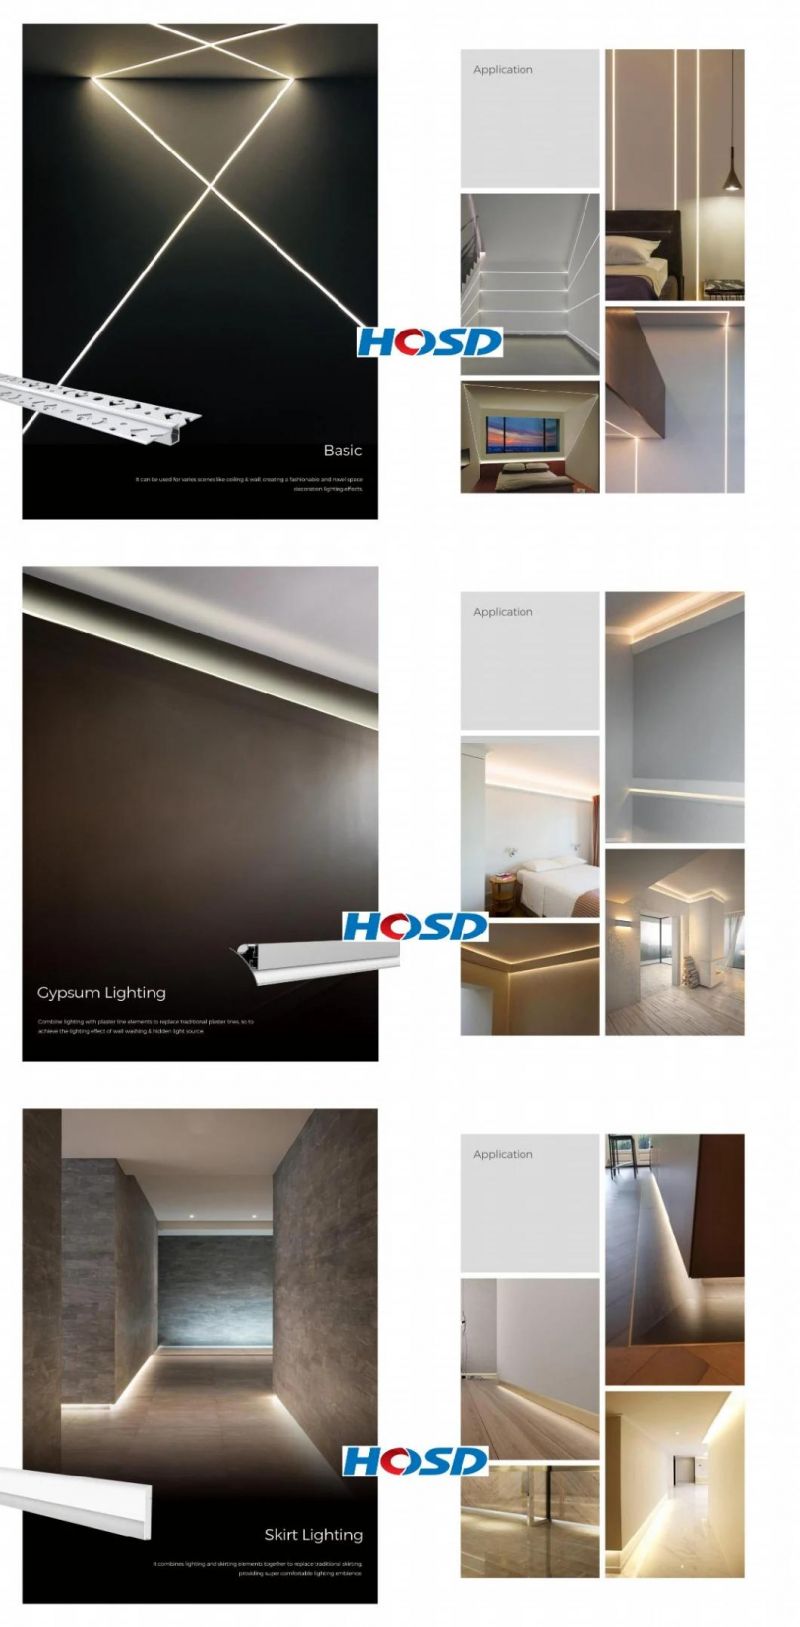 12V/24V LED Strip Cove Facade Light Aluminum Profile for Corridor, Home, KTV, Groove and Cabinet